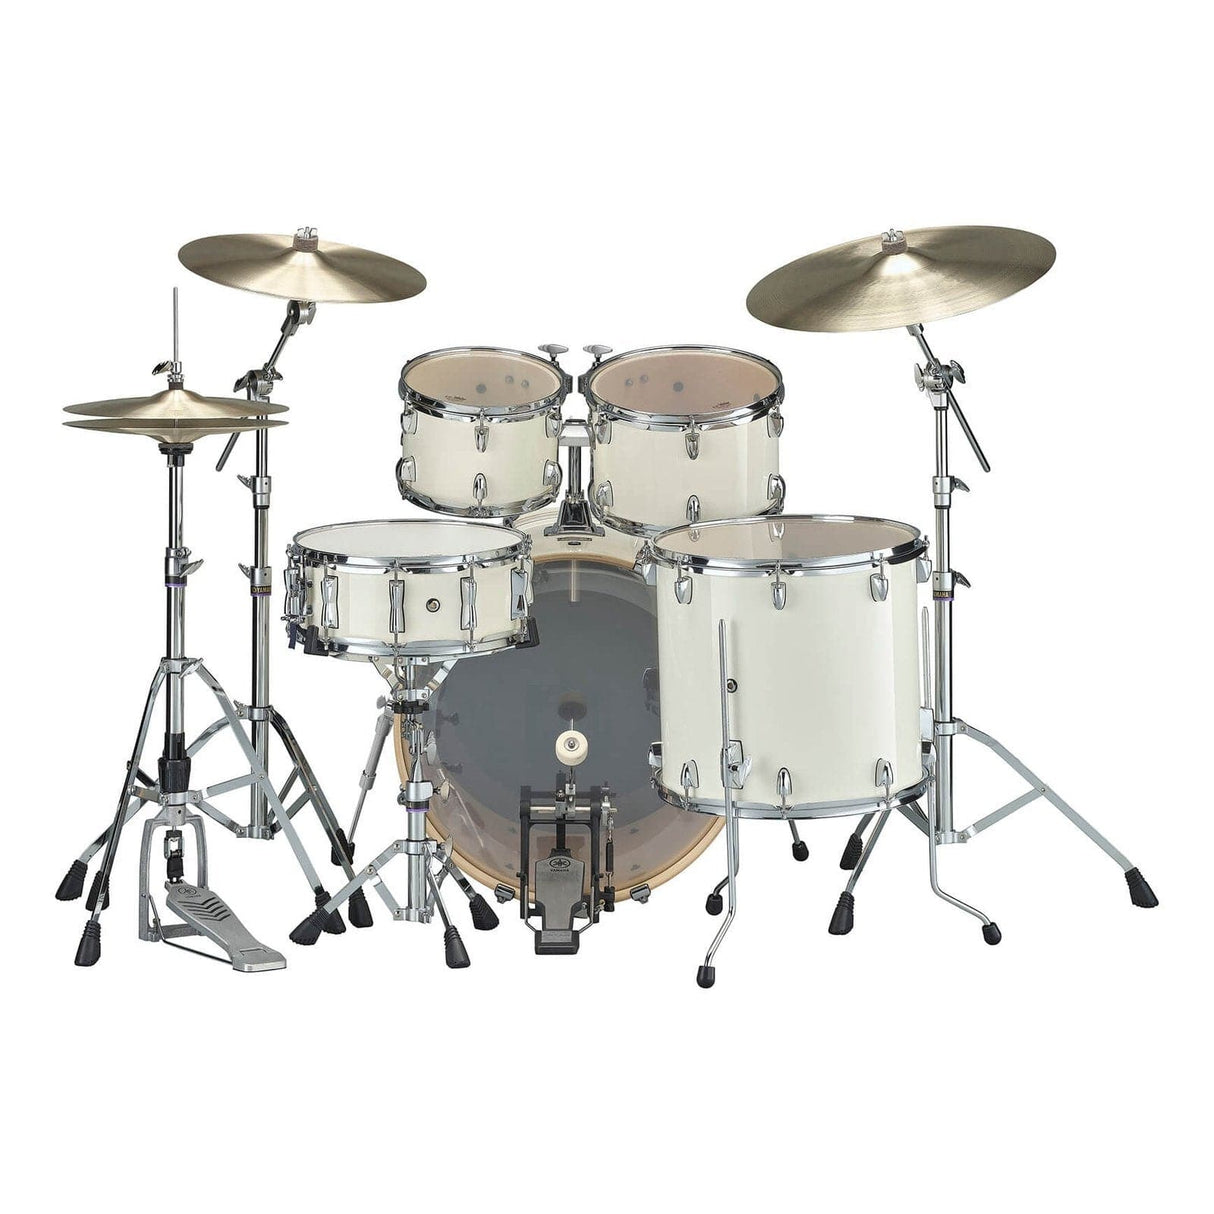 Yamaha Stage Custom Birch 5pc Drum Set w/22BD & 780 Hardware - Classic White